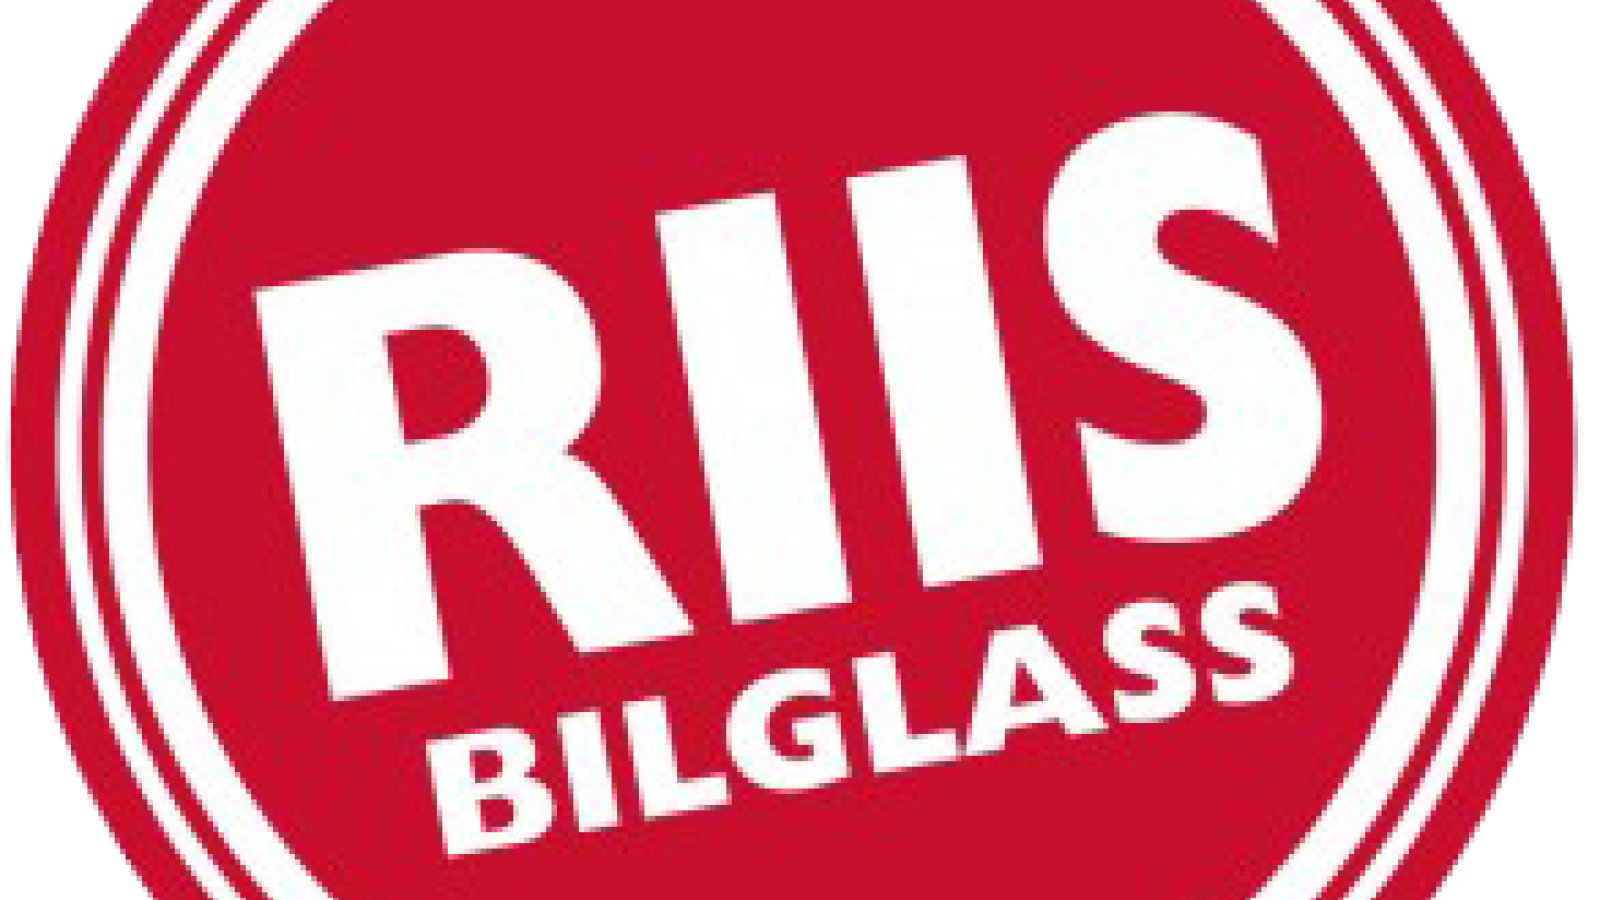 Riis-Bilglass-logo-293x300-1